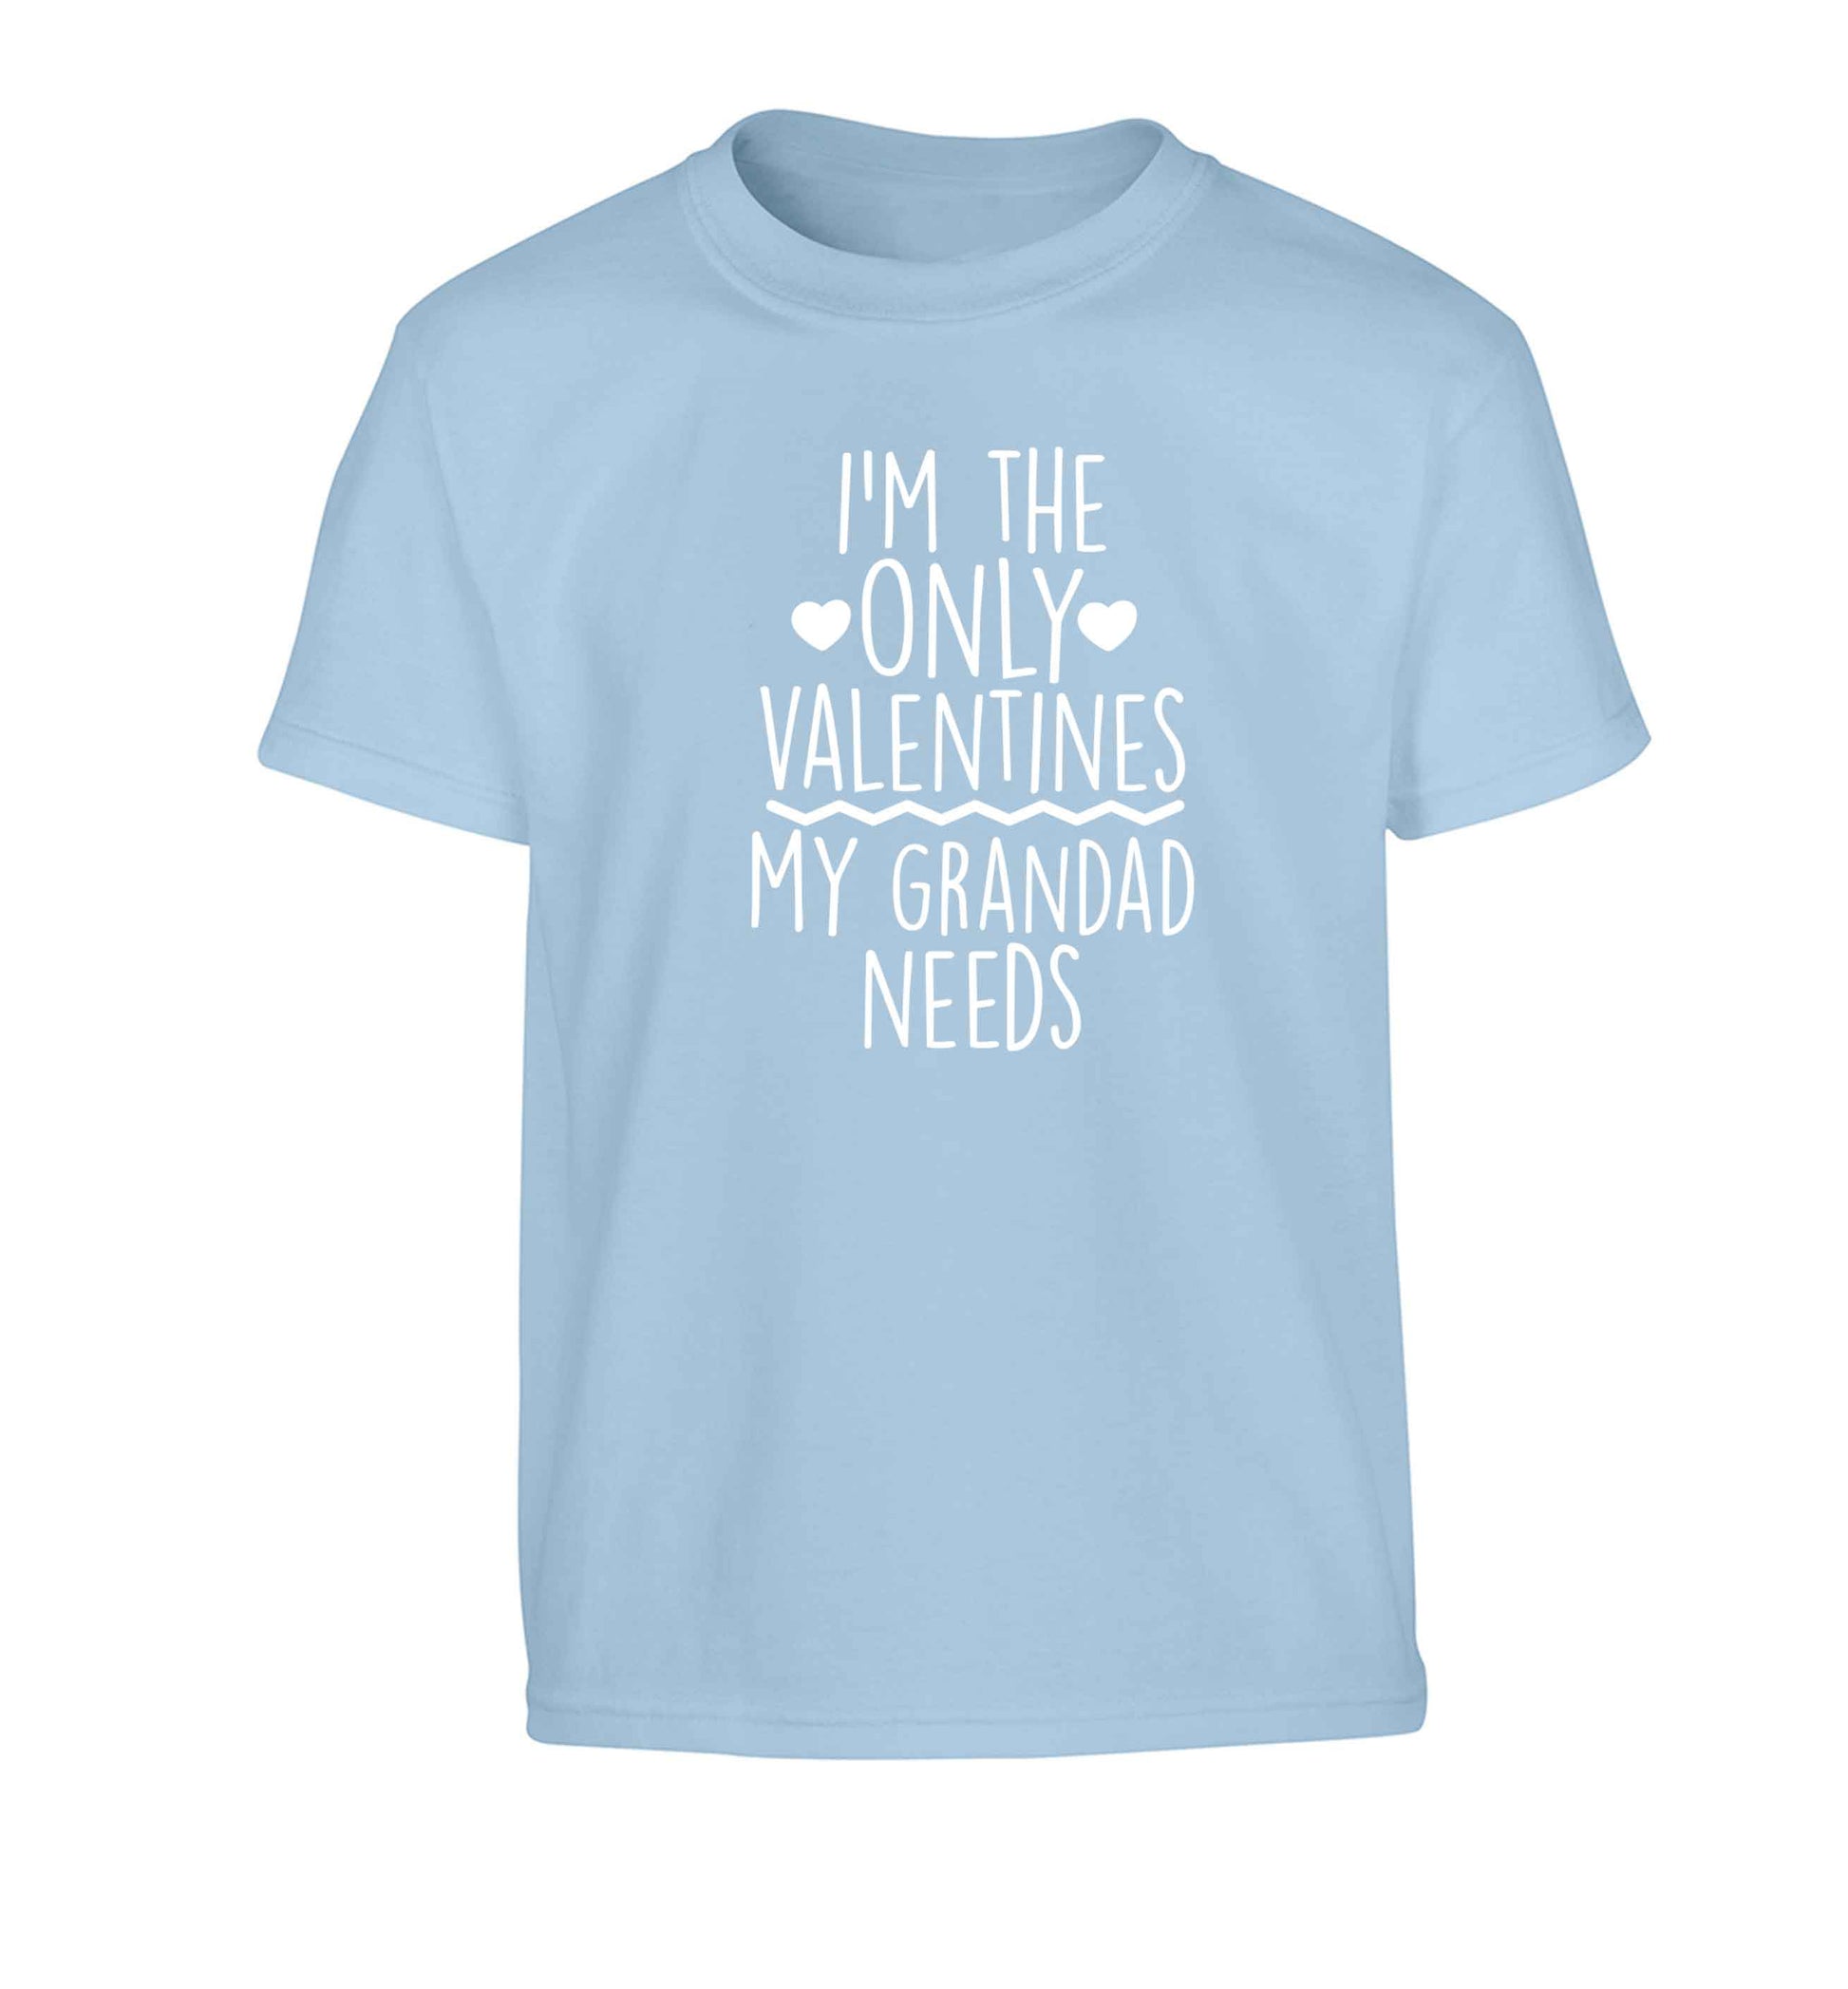 I'm the only valentines my grandad needs Children's light blue Tshirt 12-13 Years